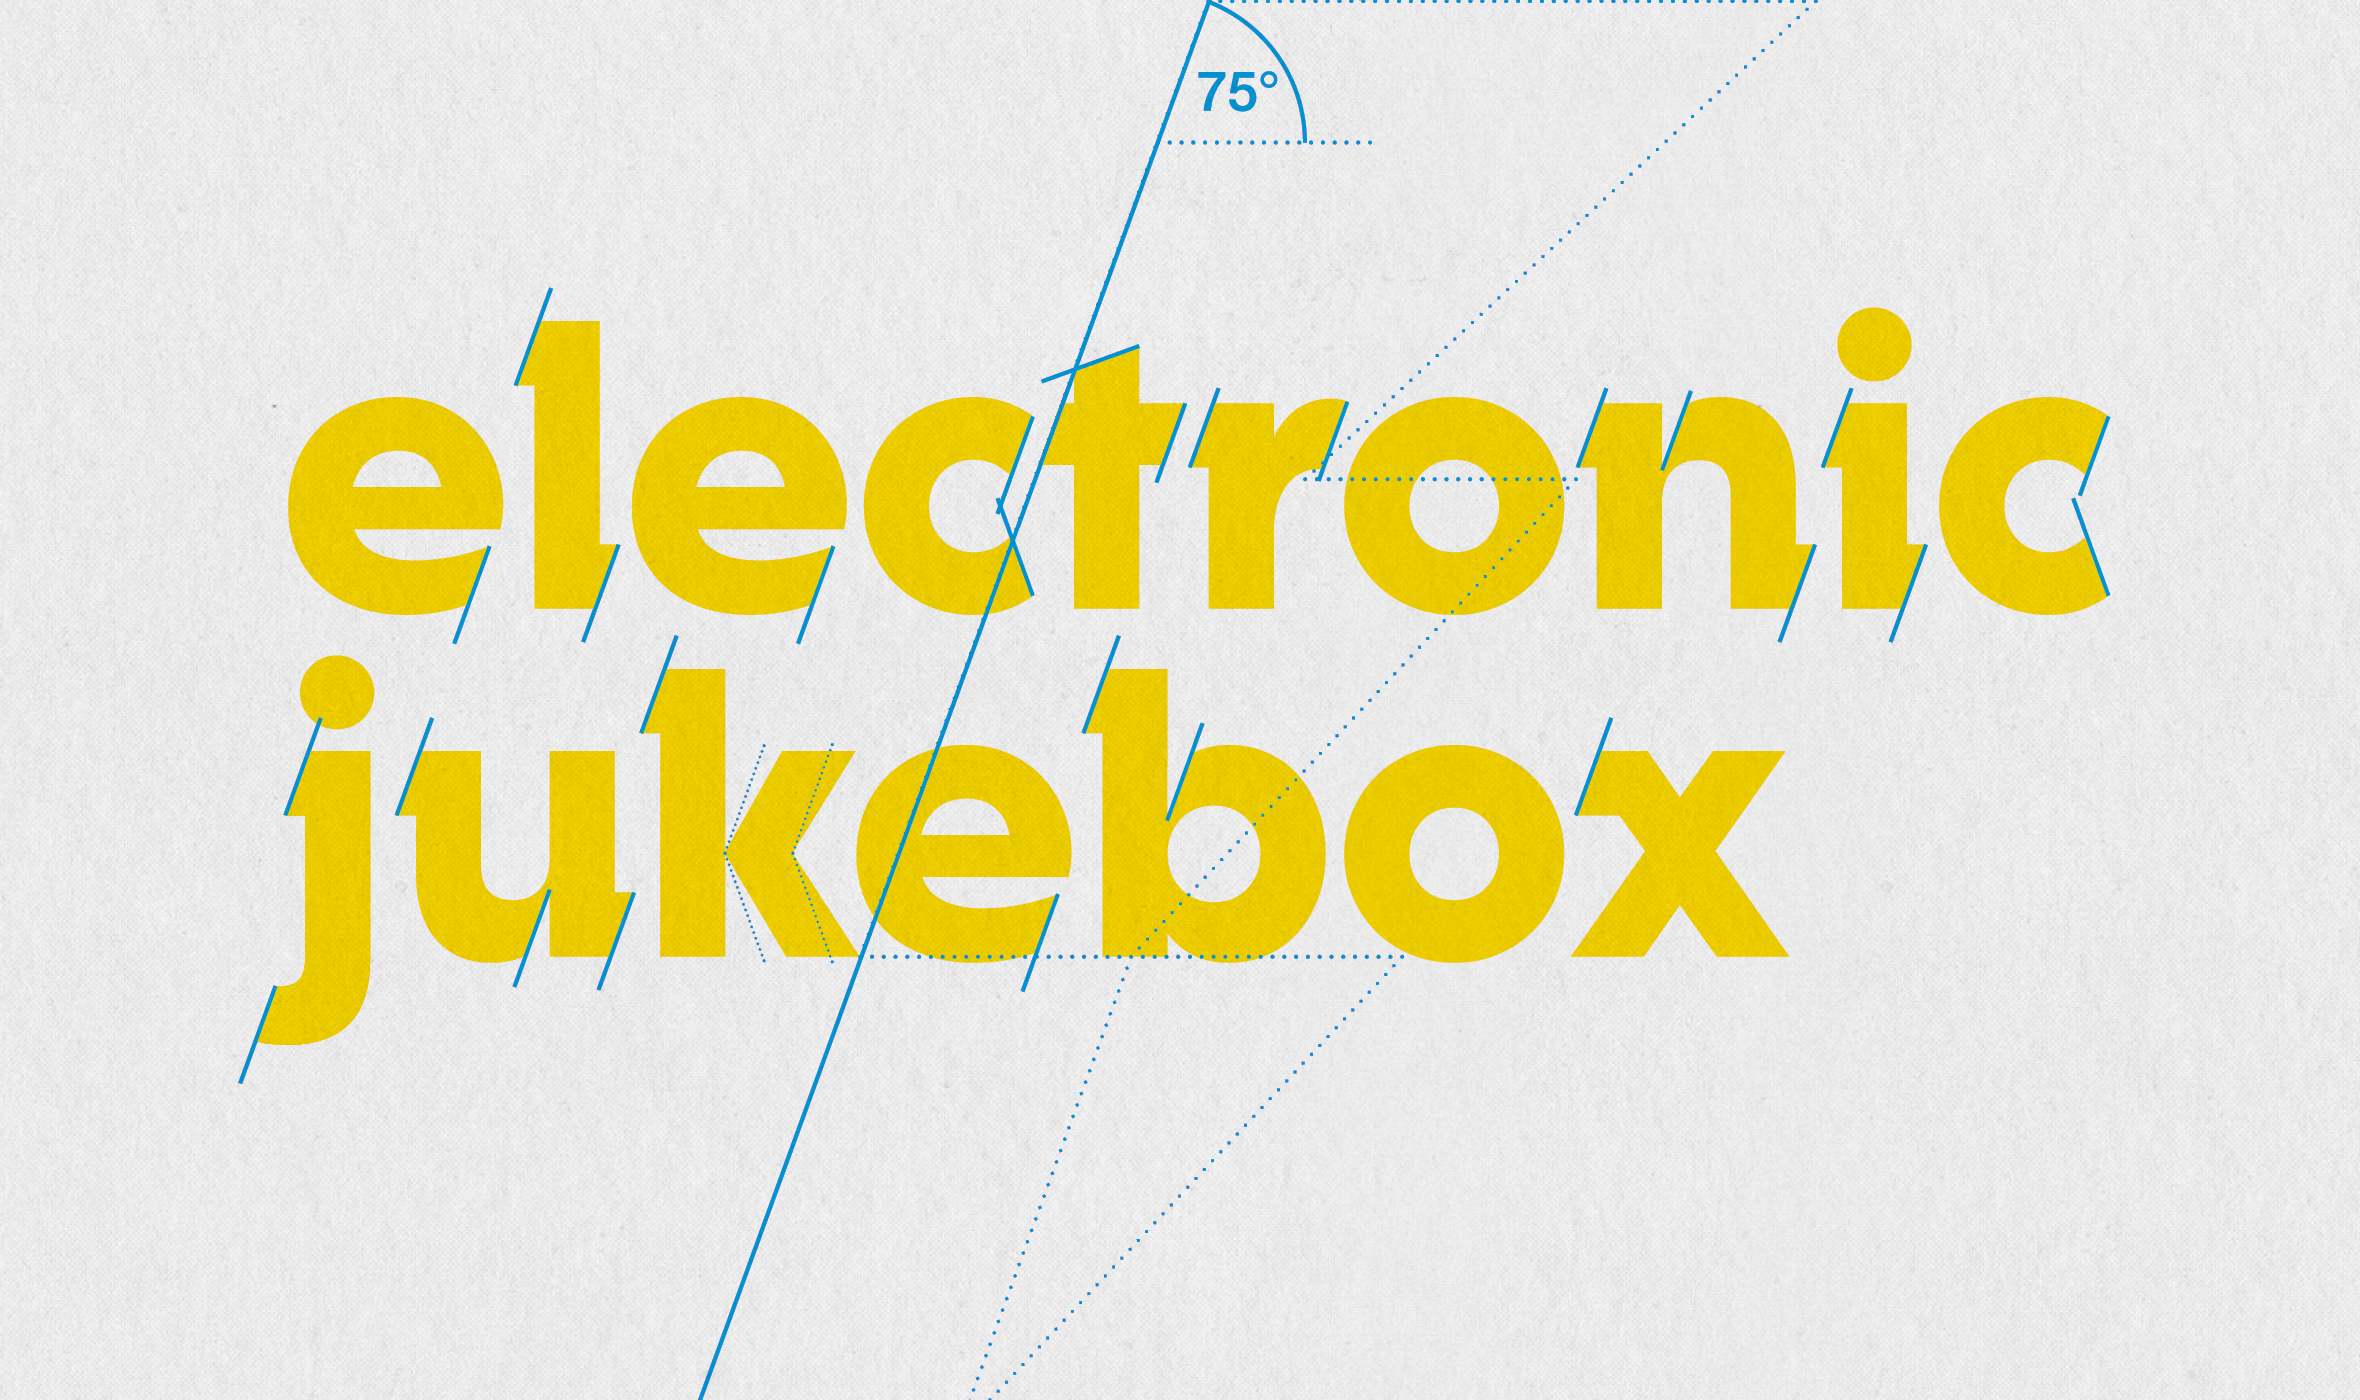 Elektronic Jukebox, Logoentwicklung, Corporate Design, Bildkonzept, Logo, Wortmarke, Typografie, Details, Winkel, Flash, Blitz, DJ, elektronische Musik